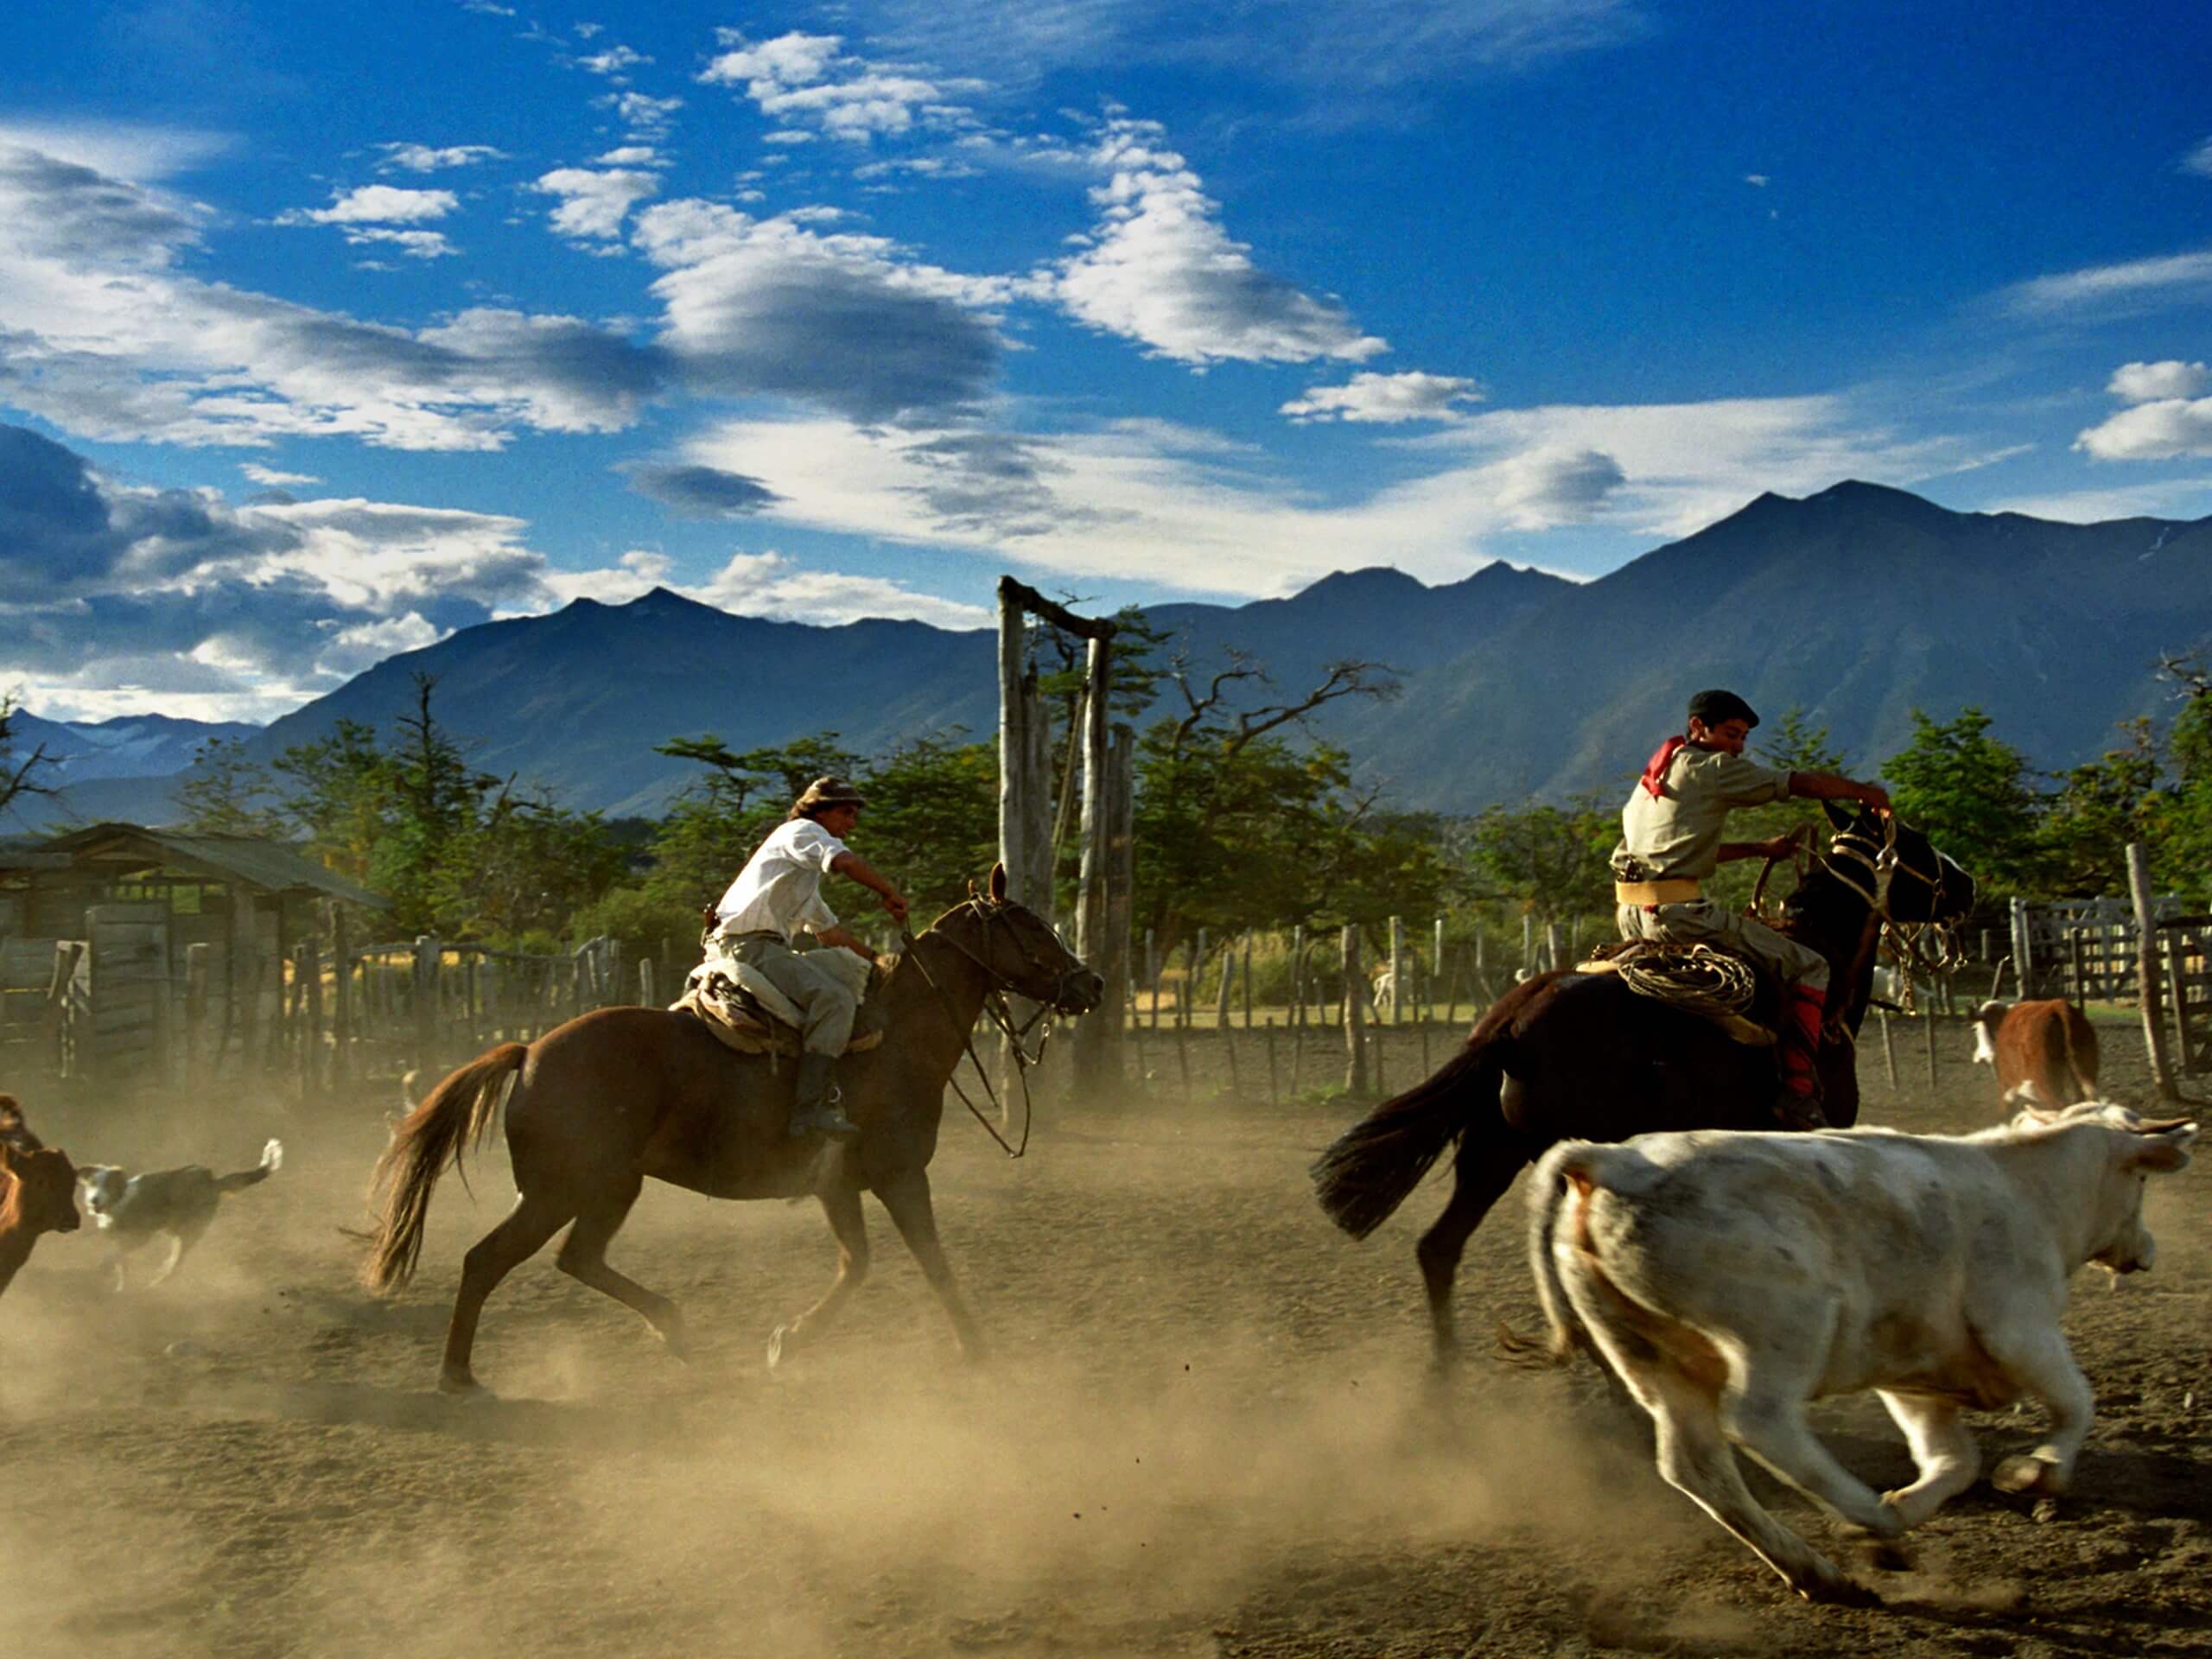 Cowboys in Patagonia